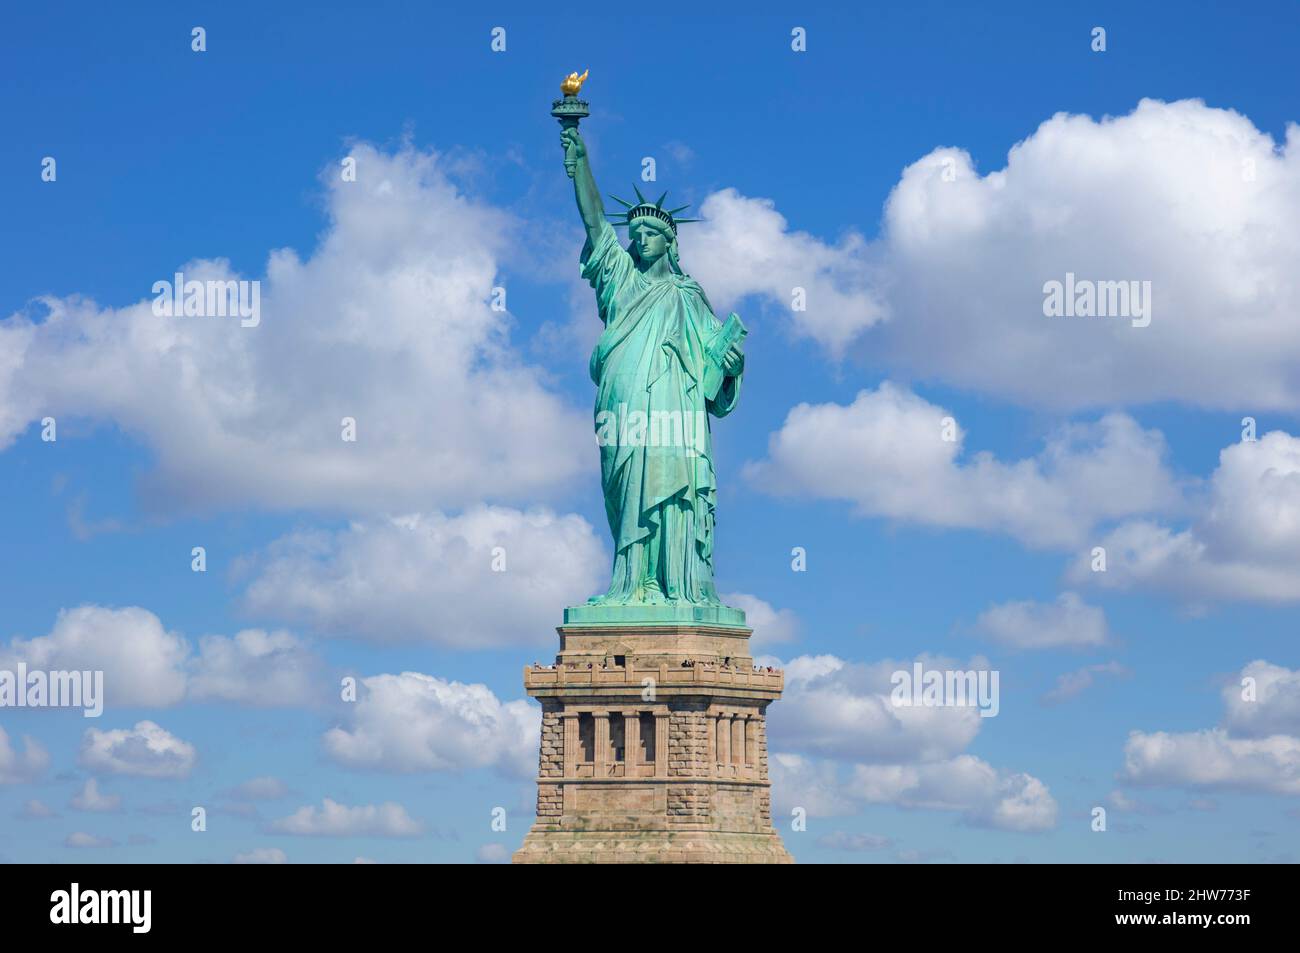 Statue de la liberté New York Statue de la liberté ville de New York Statue de la liberté île de New york état états-unis états-unis d'amérique ciel bleu nuages blancs Banque D'Images